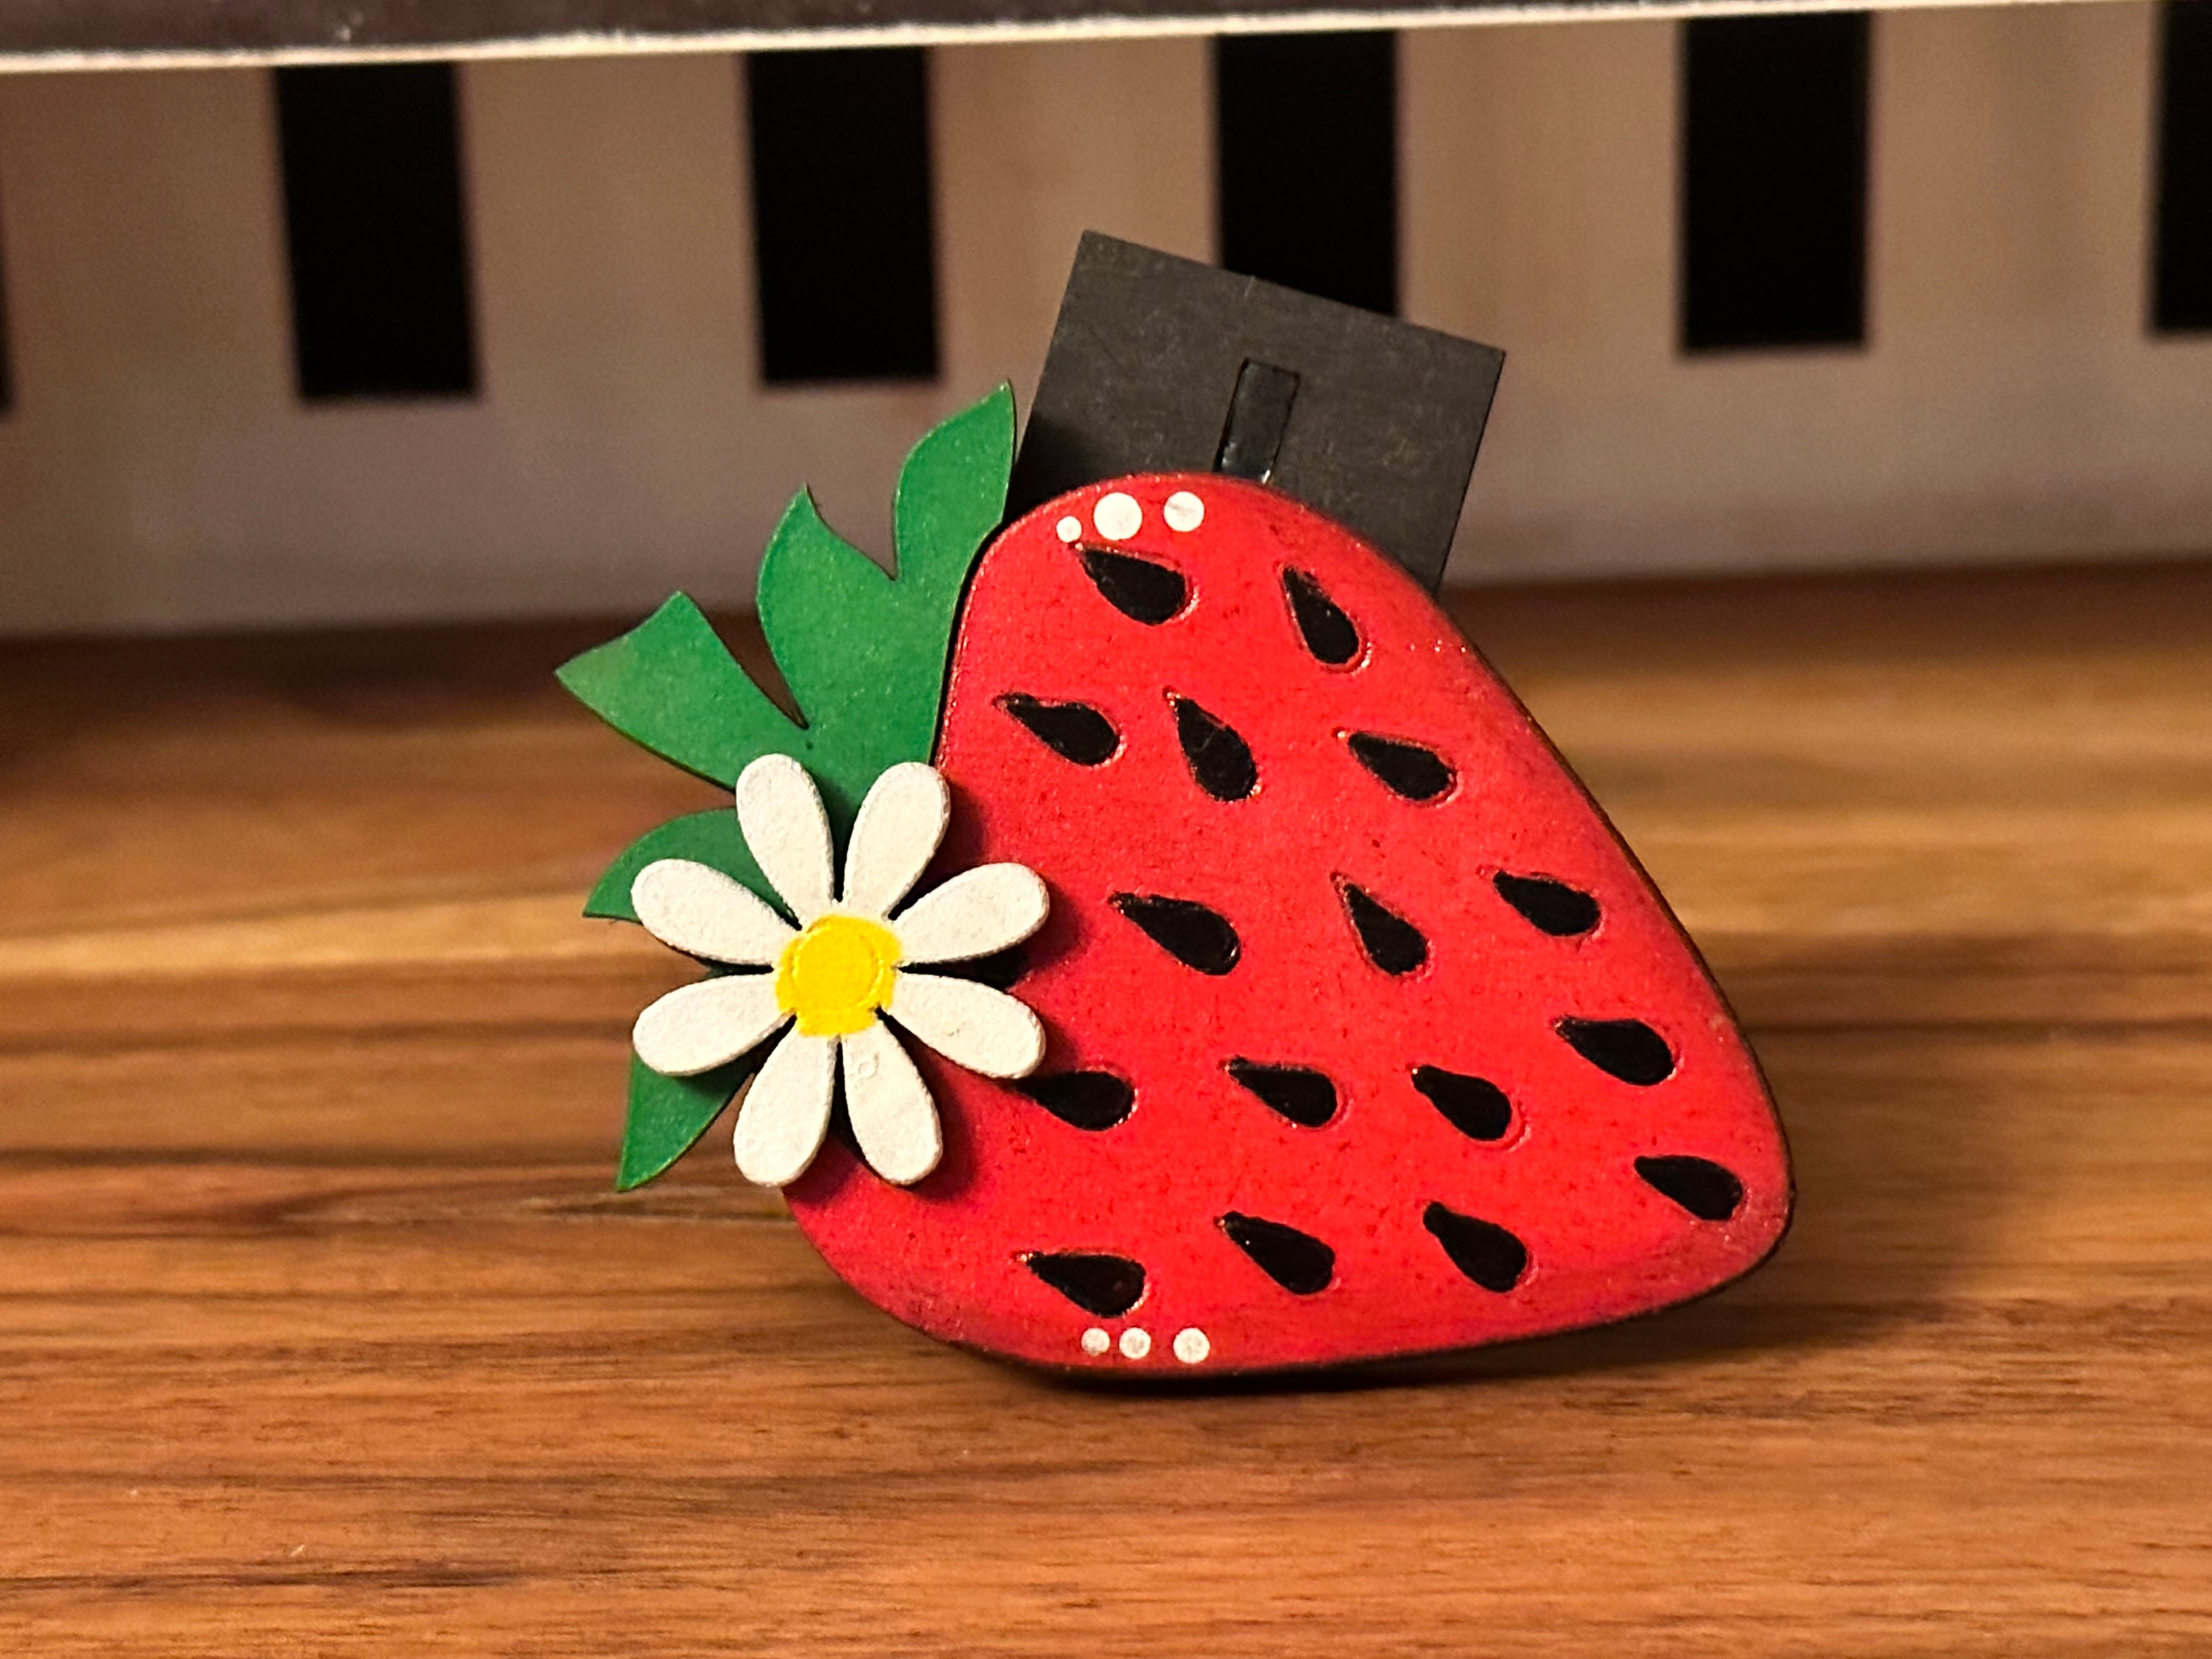 Wood strawberry tier tray display Kit